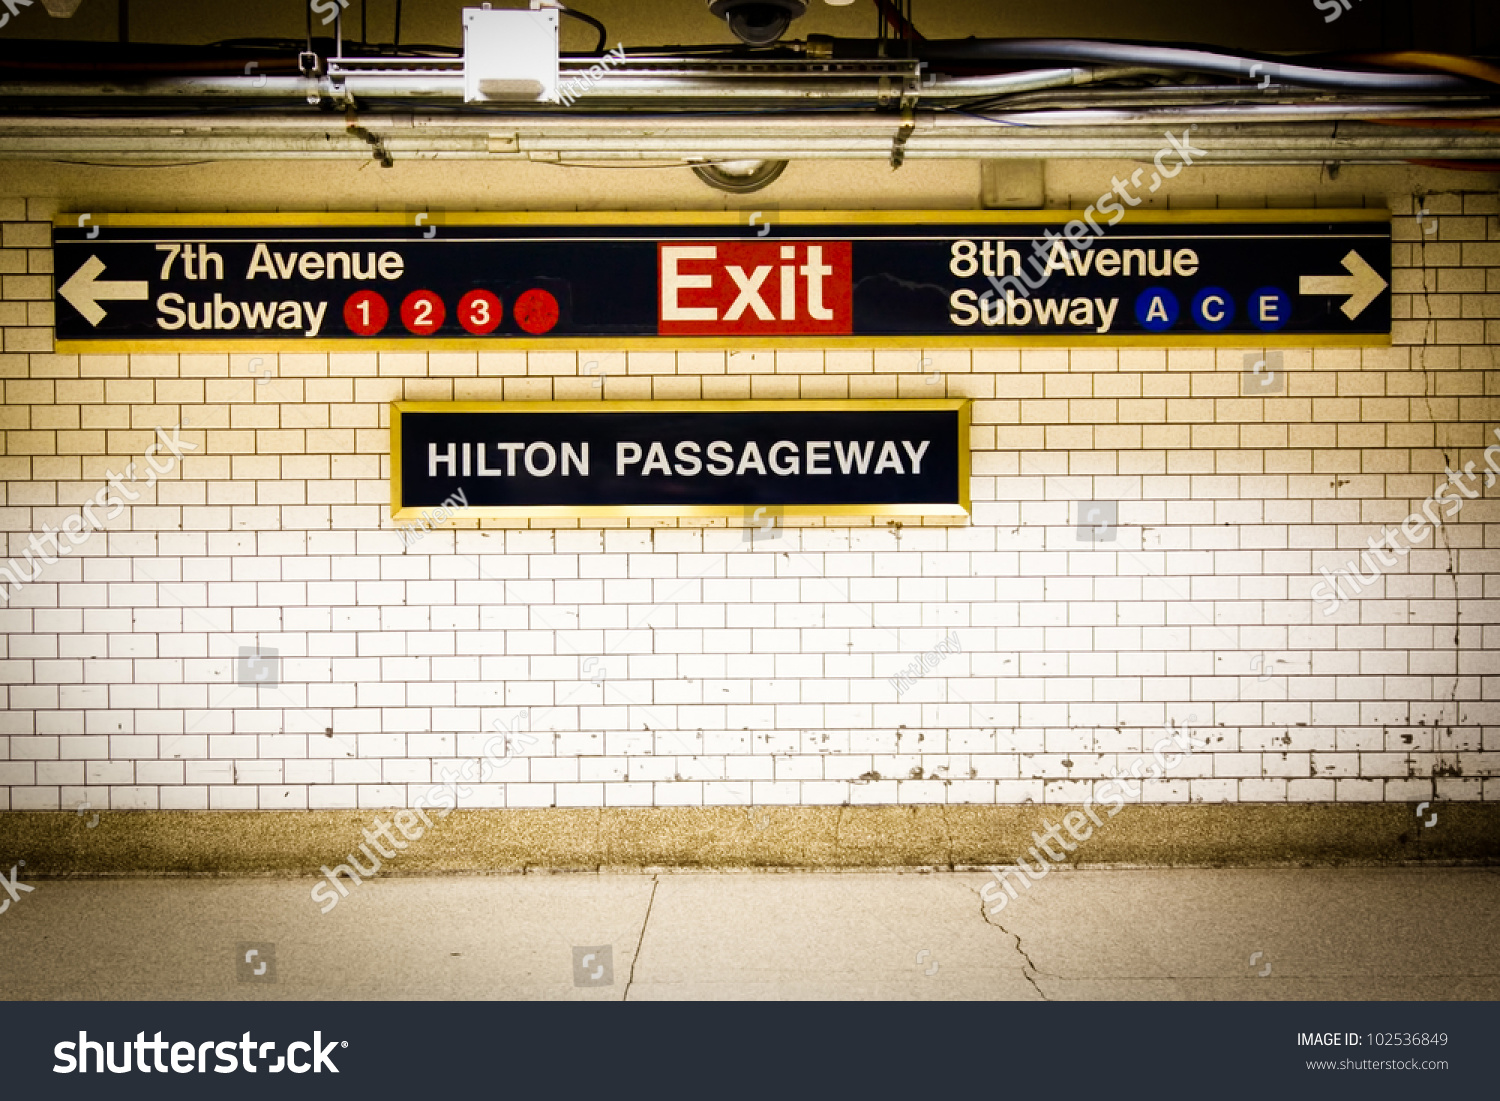 NYC Penn Station subway directional sign on tile wall #102536849